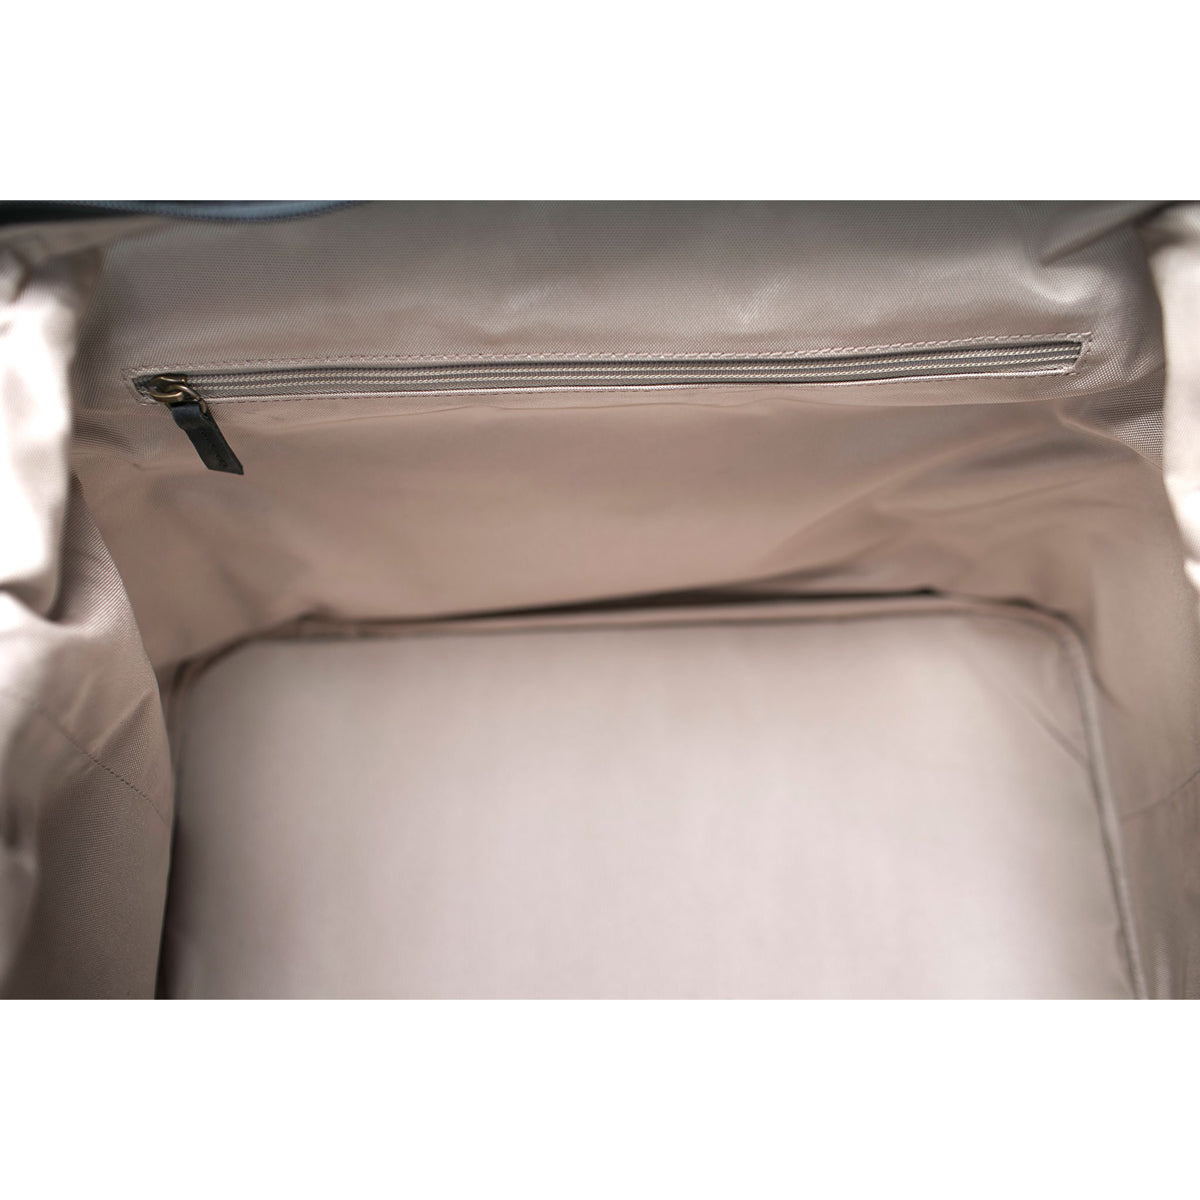 Kelly Moore Jude Canvas/Full Grain Leather Duffel 2.0 Camera Bag